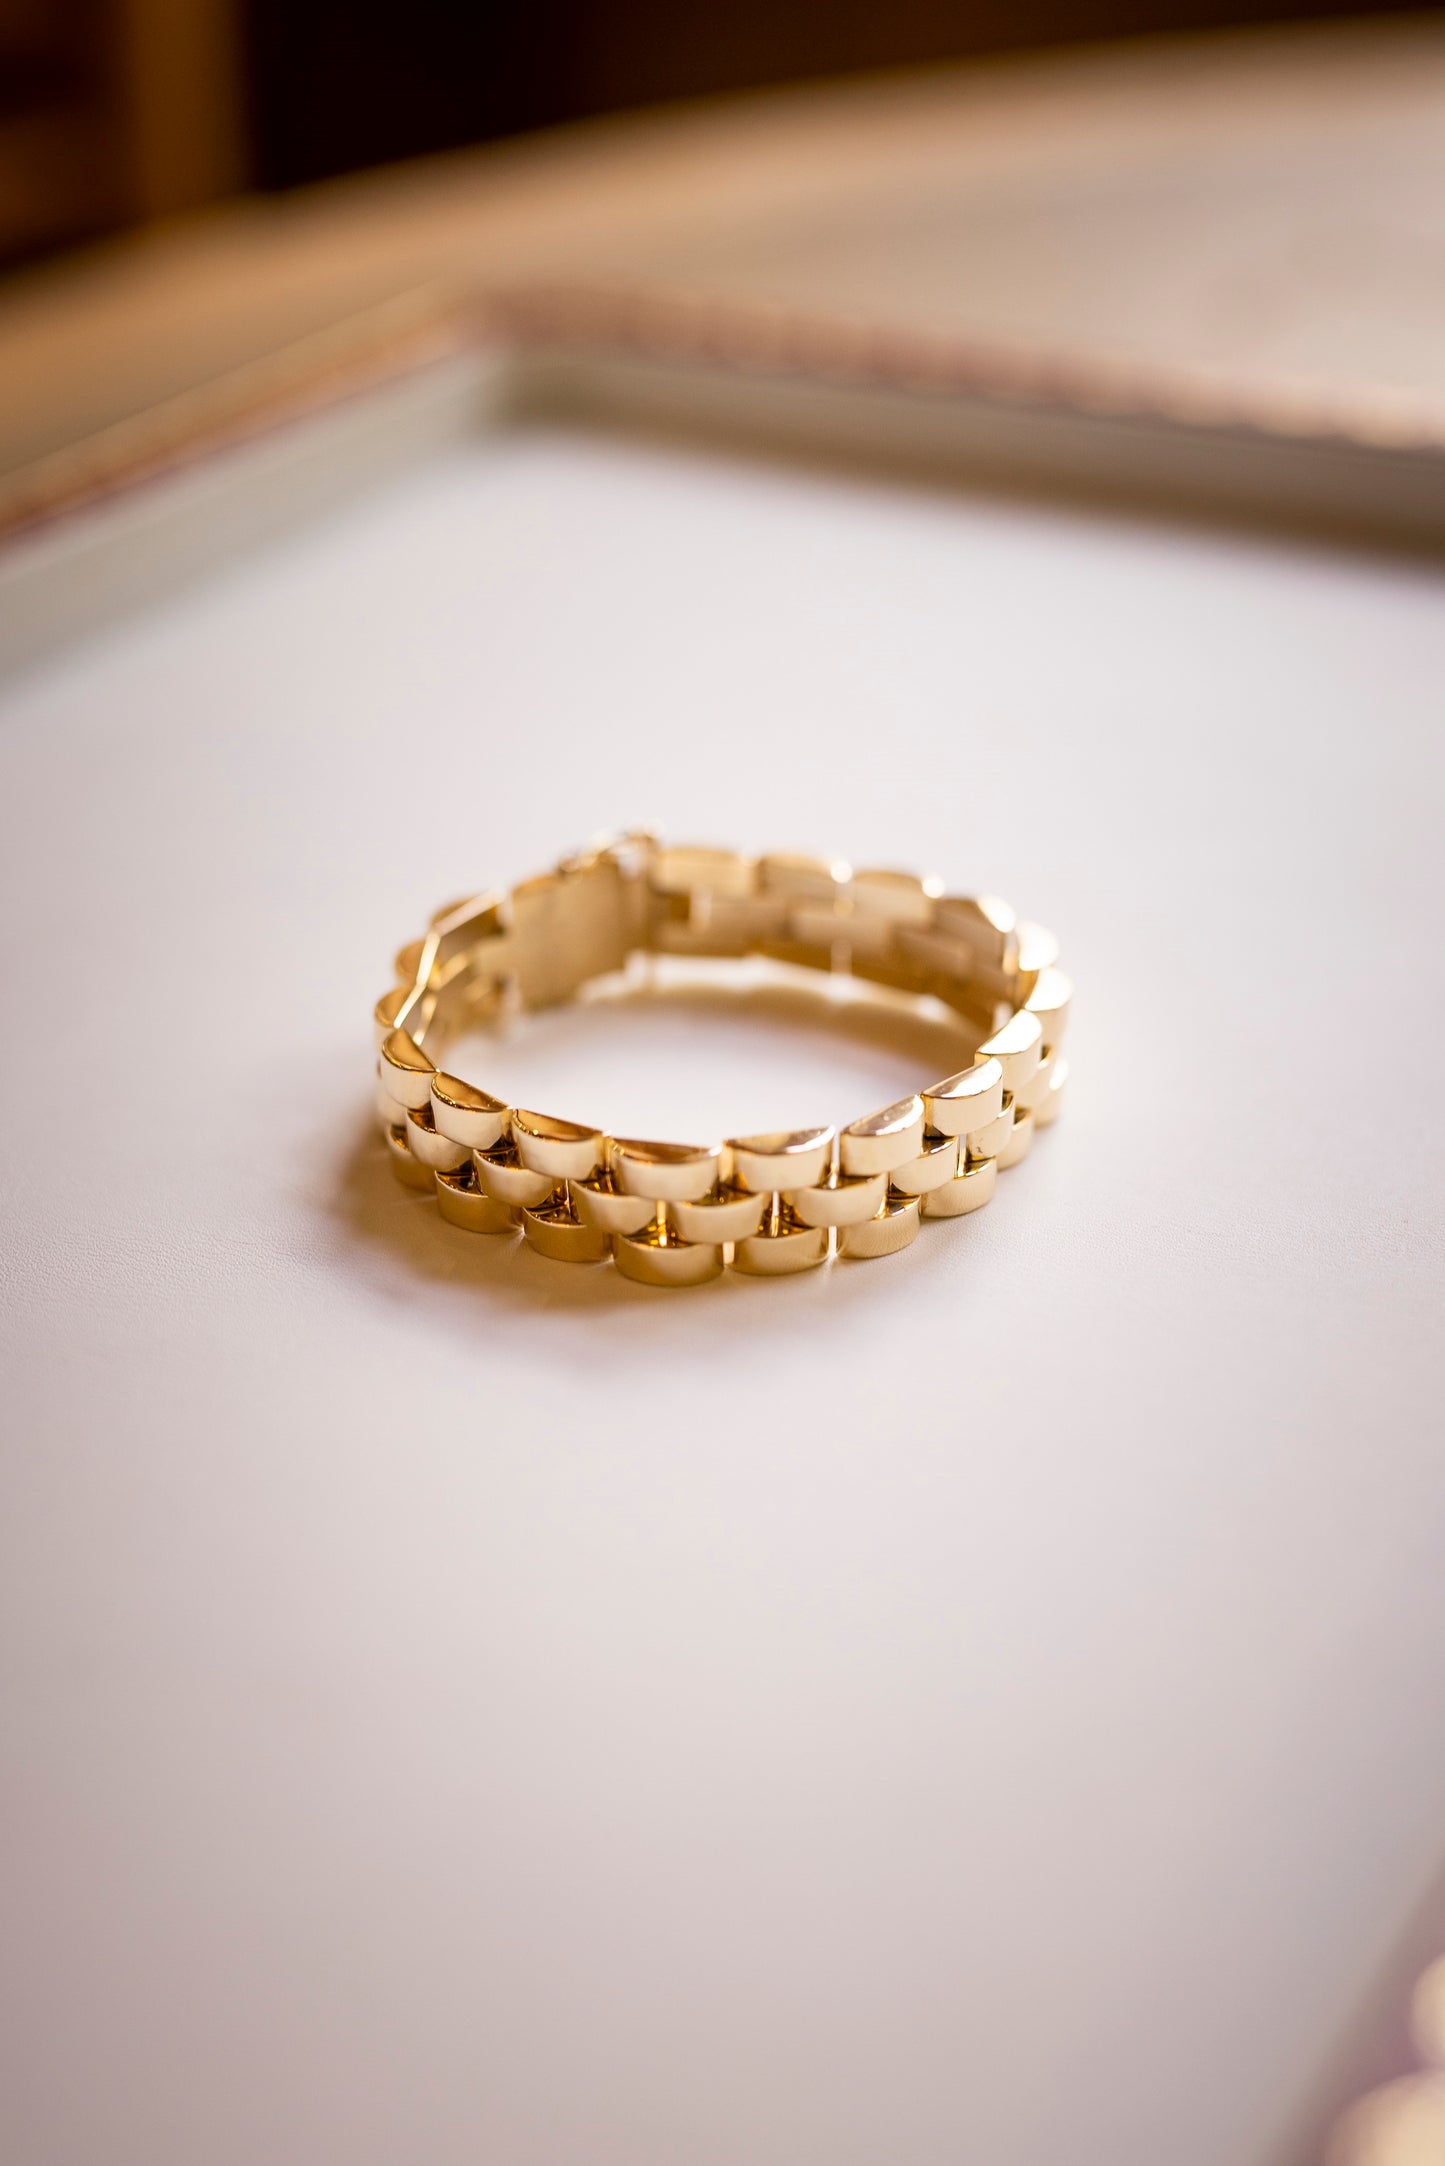 A 14 kt yellow gold bracelet